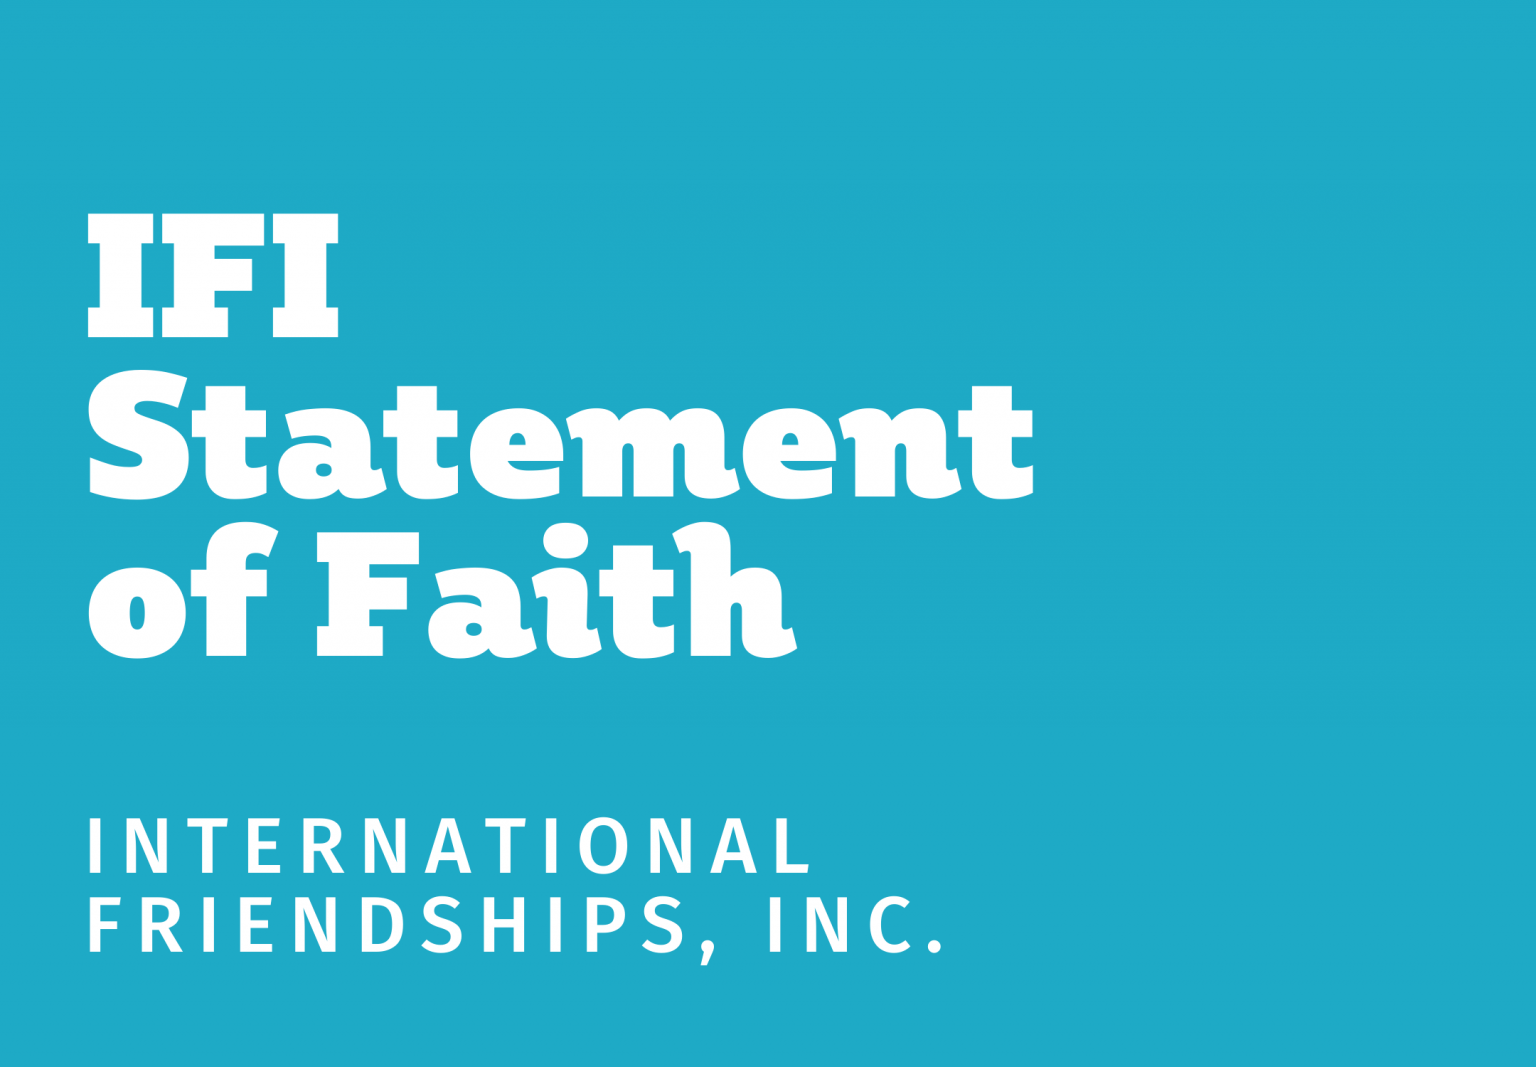 IFI Statement of Faith Image